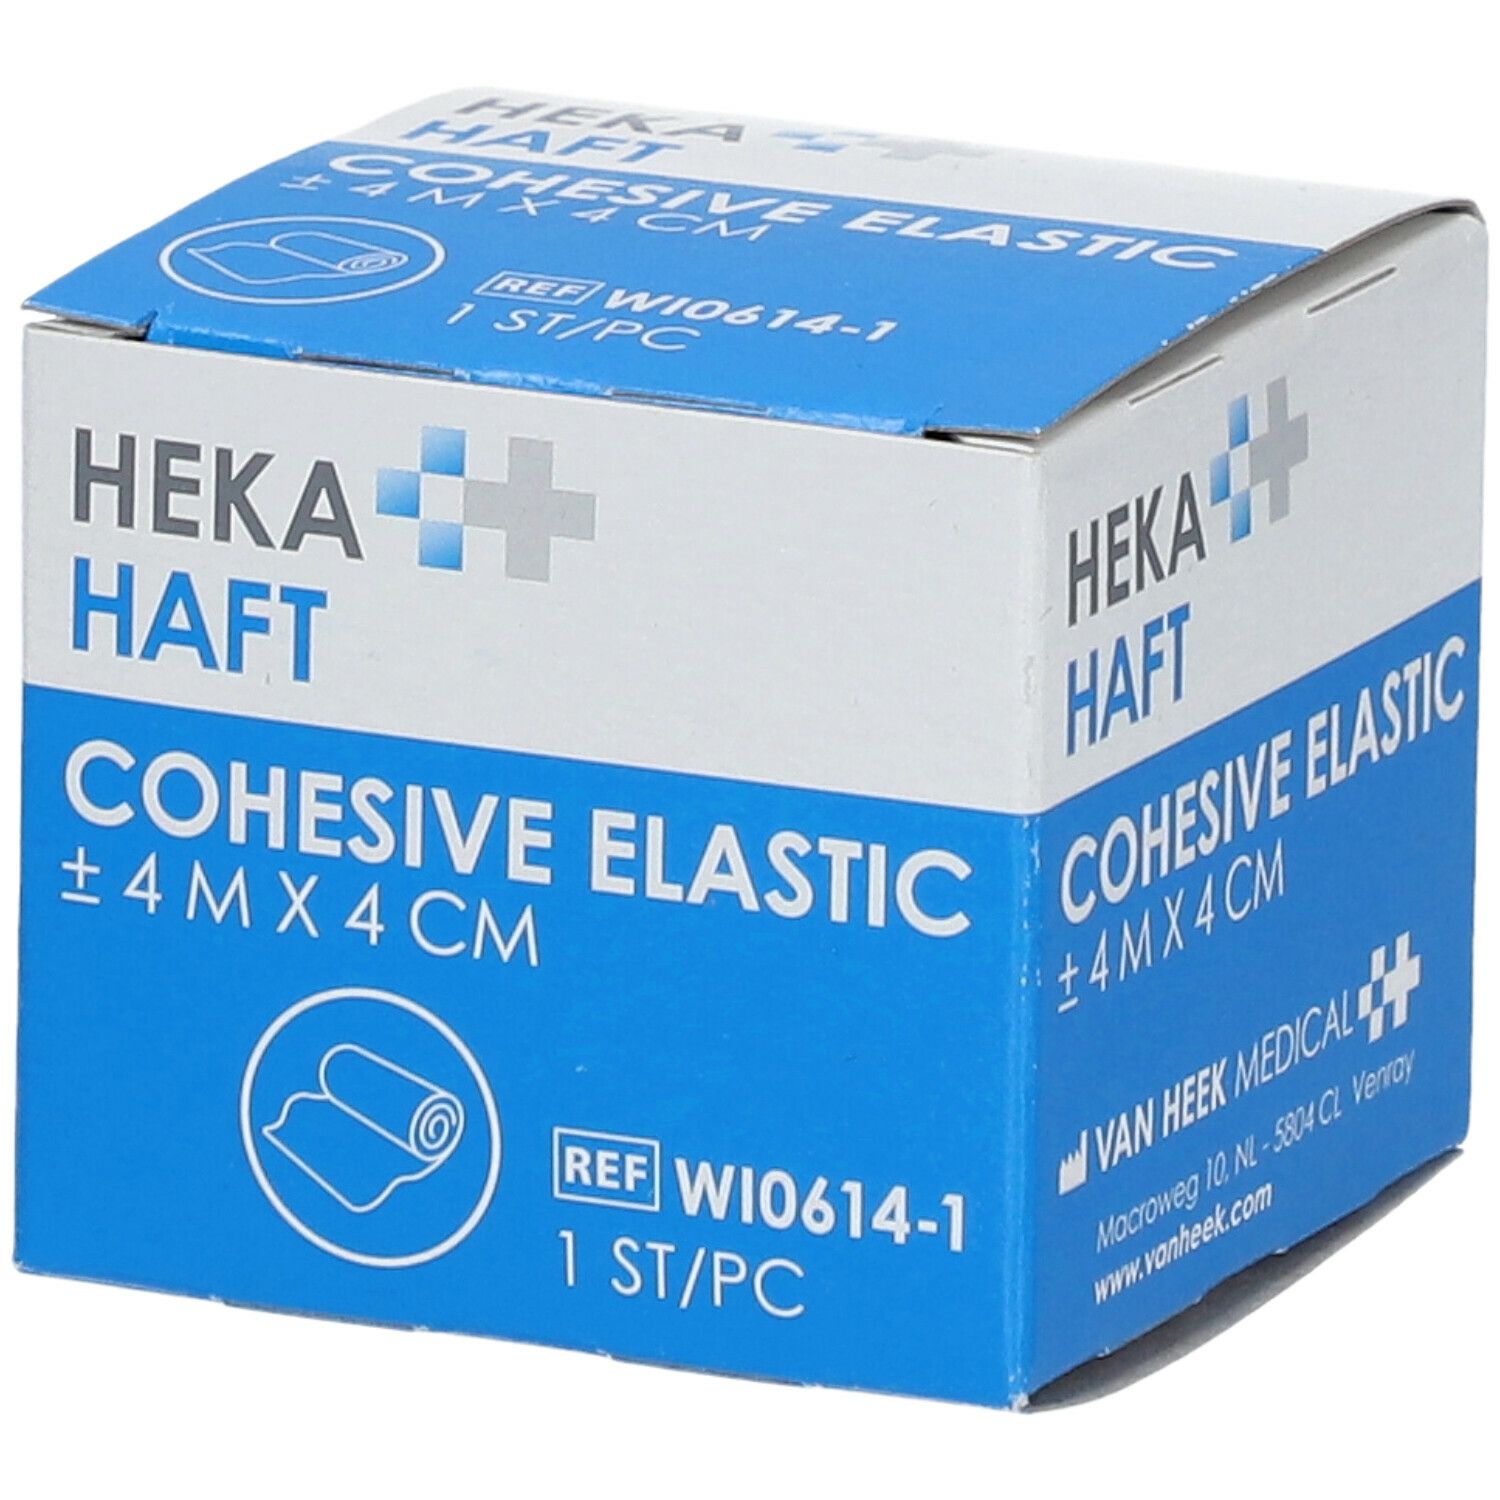 Heka Haft Cohesive Elastic 4 m x 4 cm